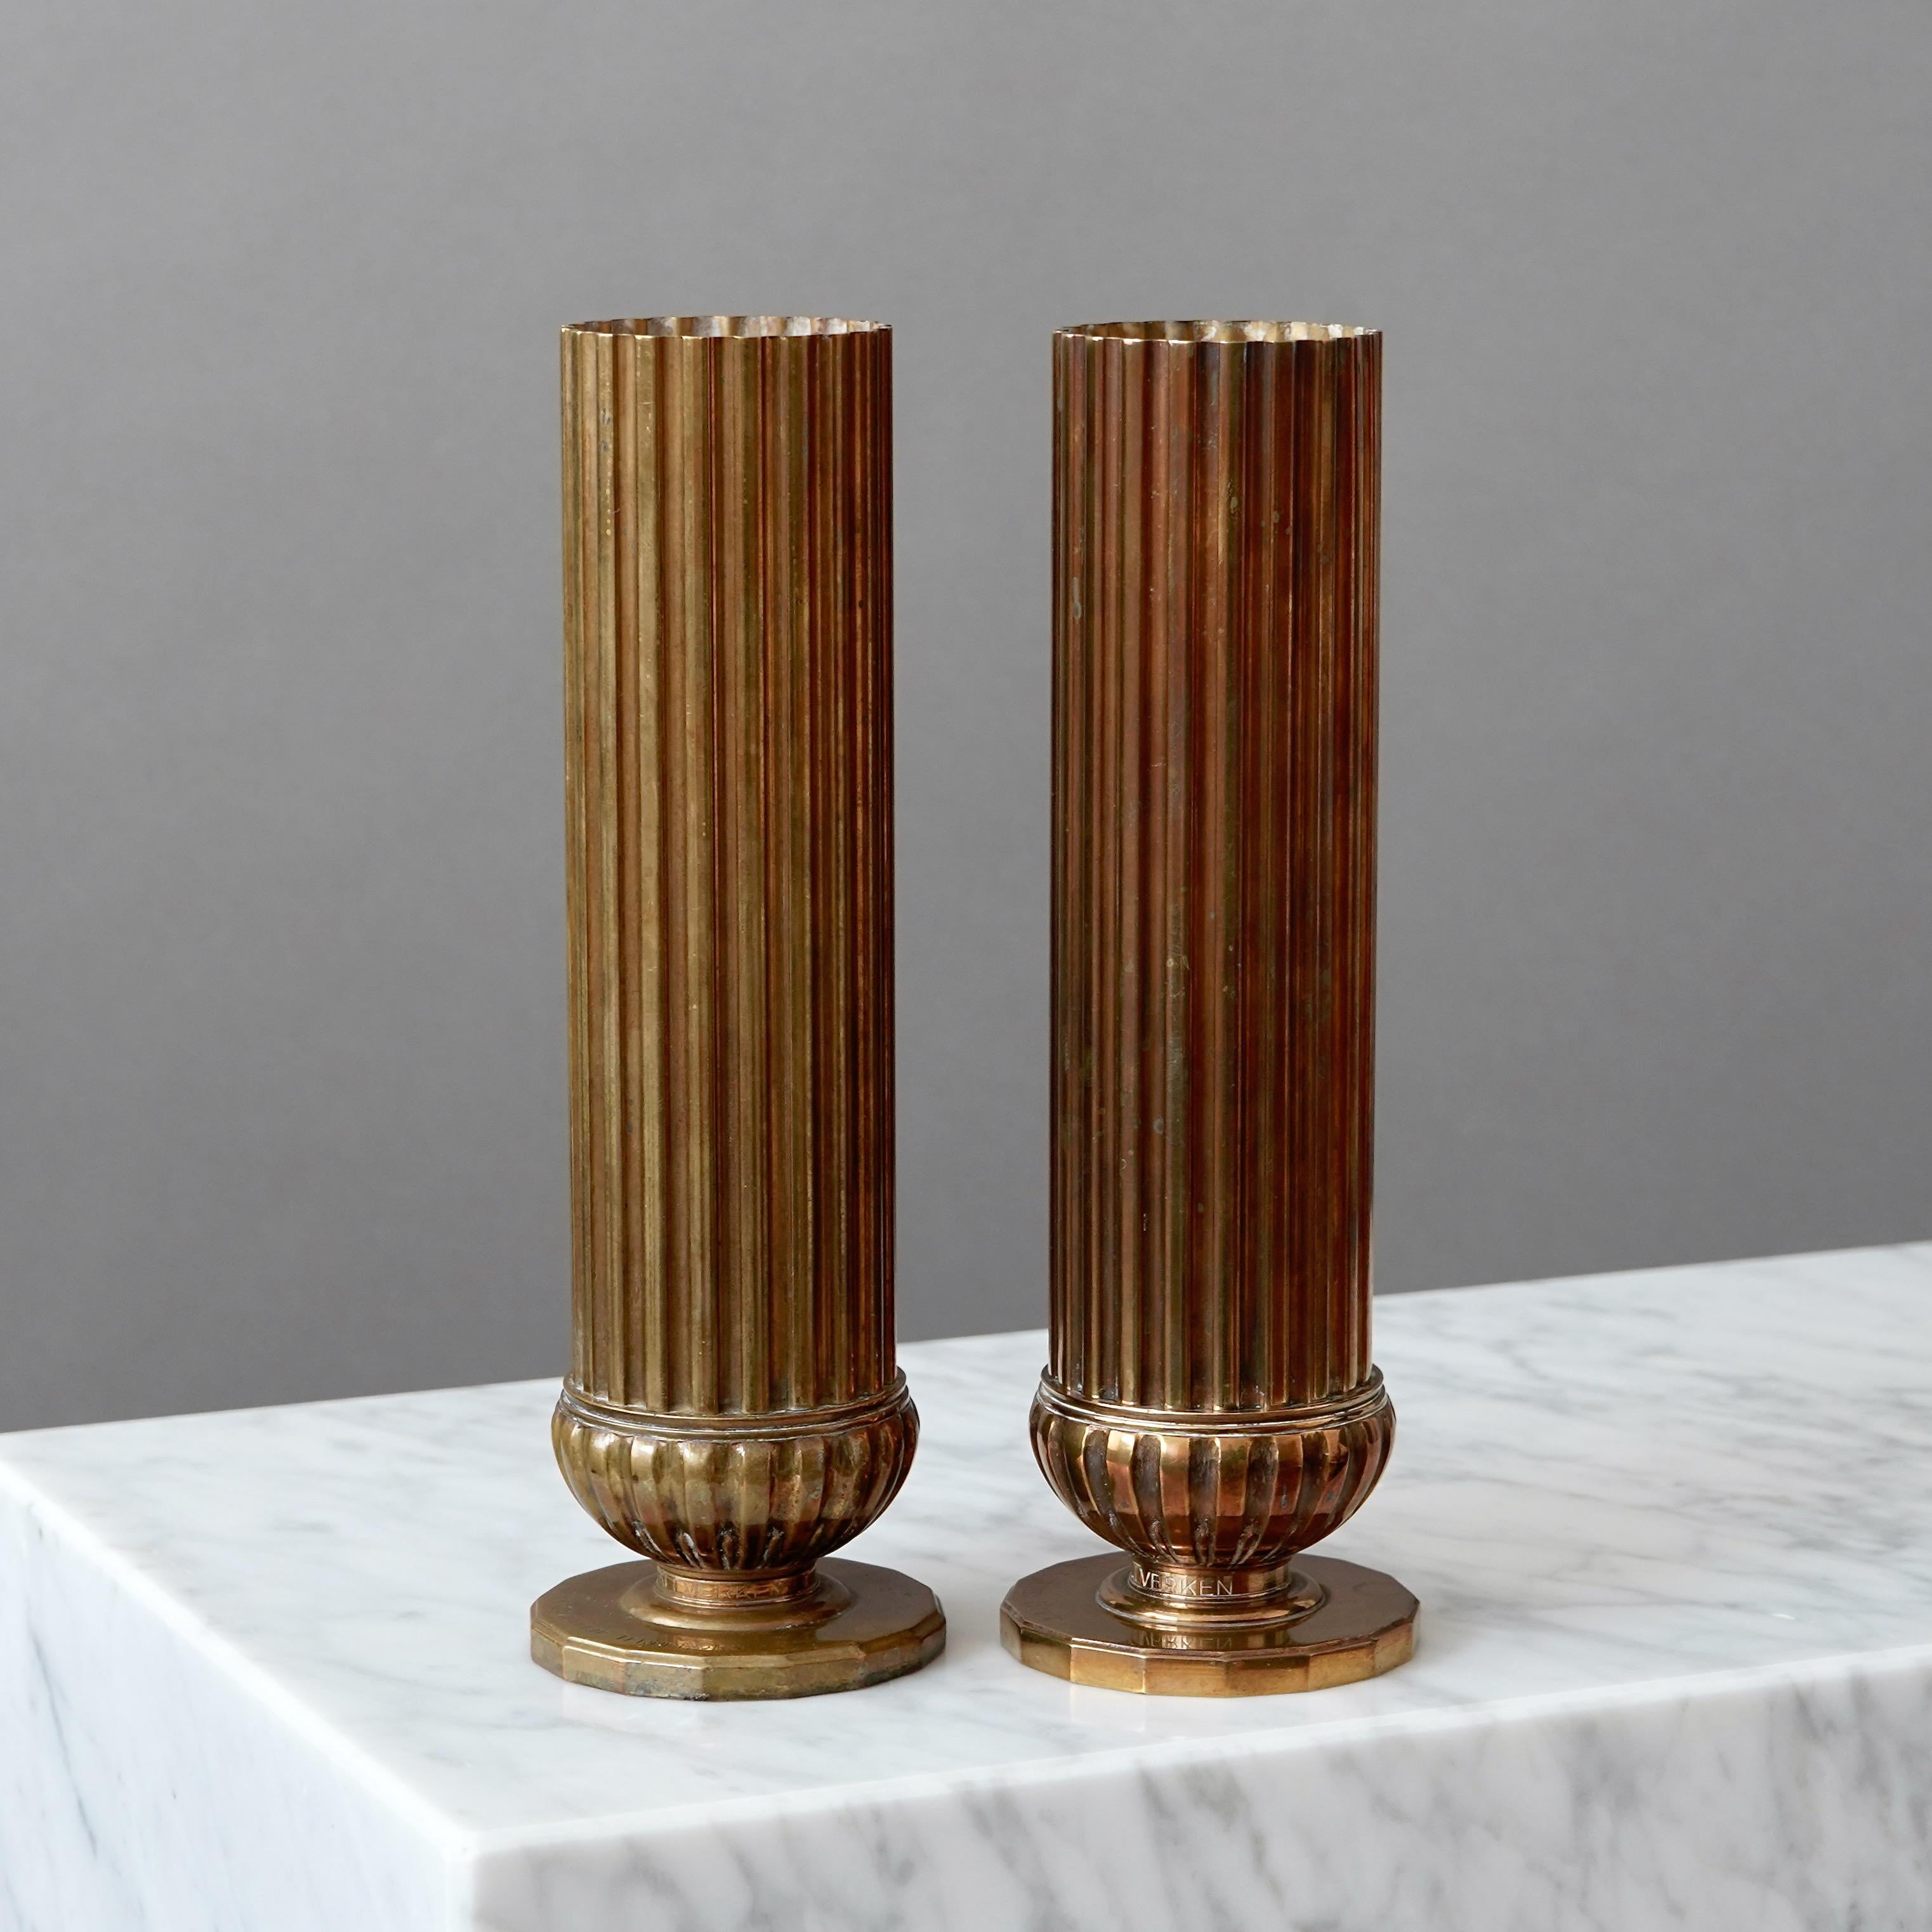 A pair of Bronze Art Deco Vases by SVM Handarbete, Sweden, 1930s For Sale 2